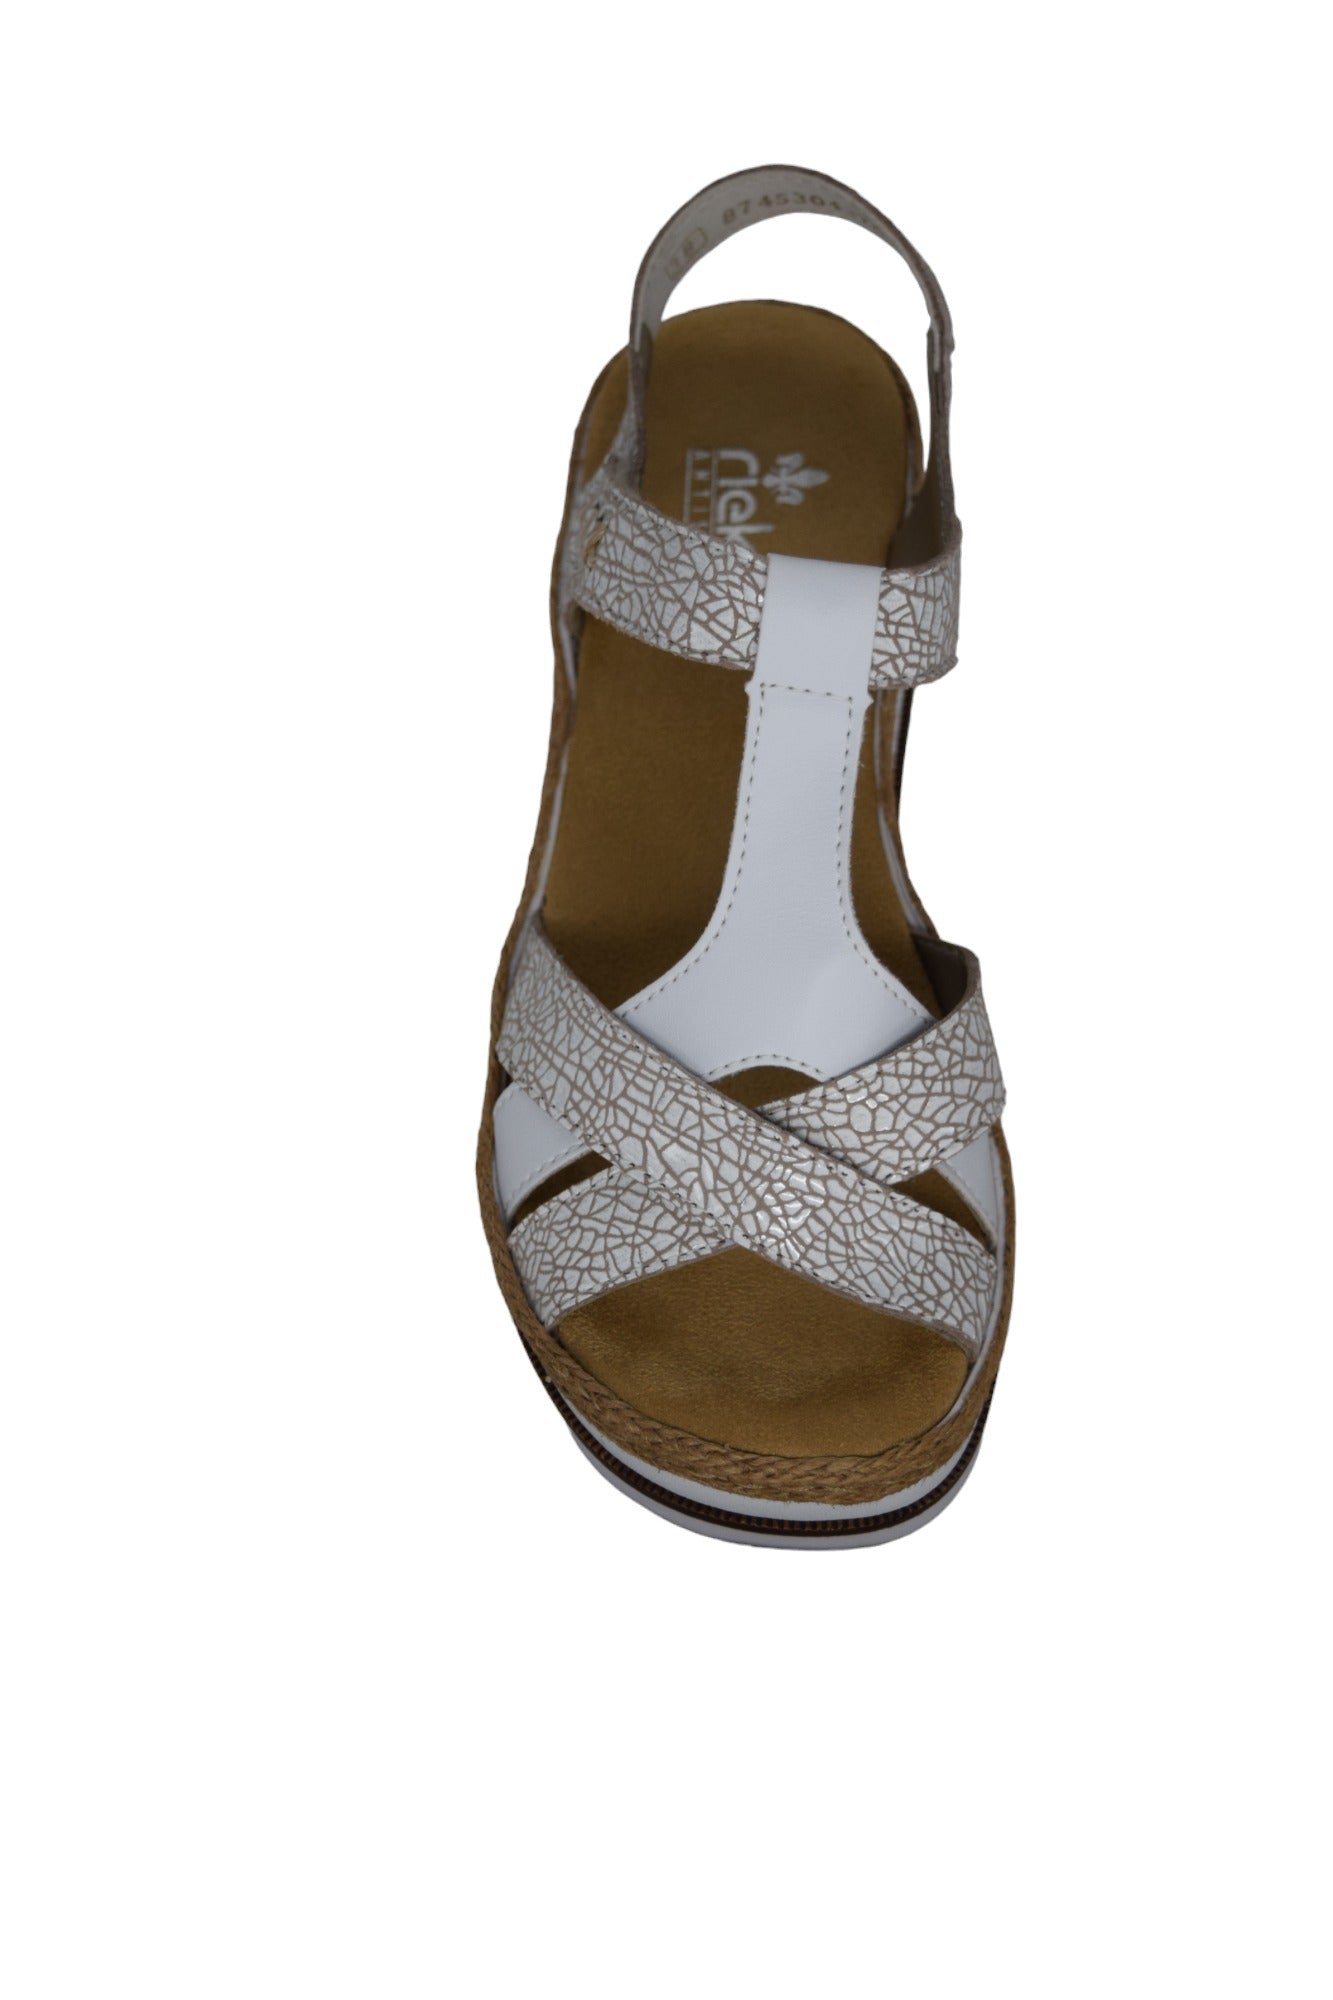 Rieker Raina Velcro Strap Sandal - Women's